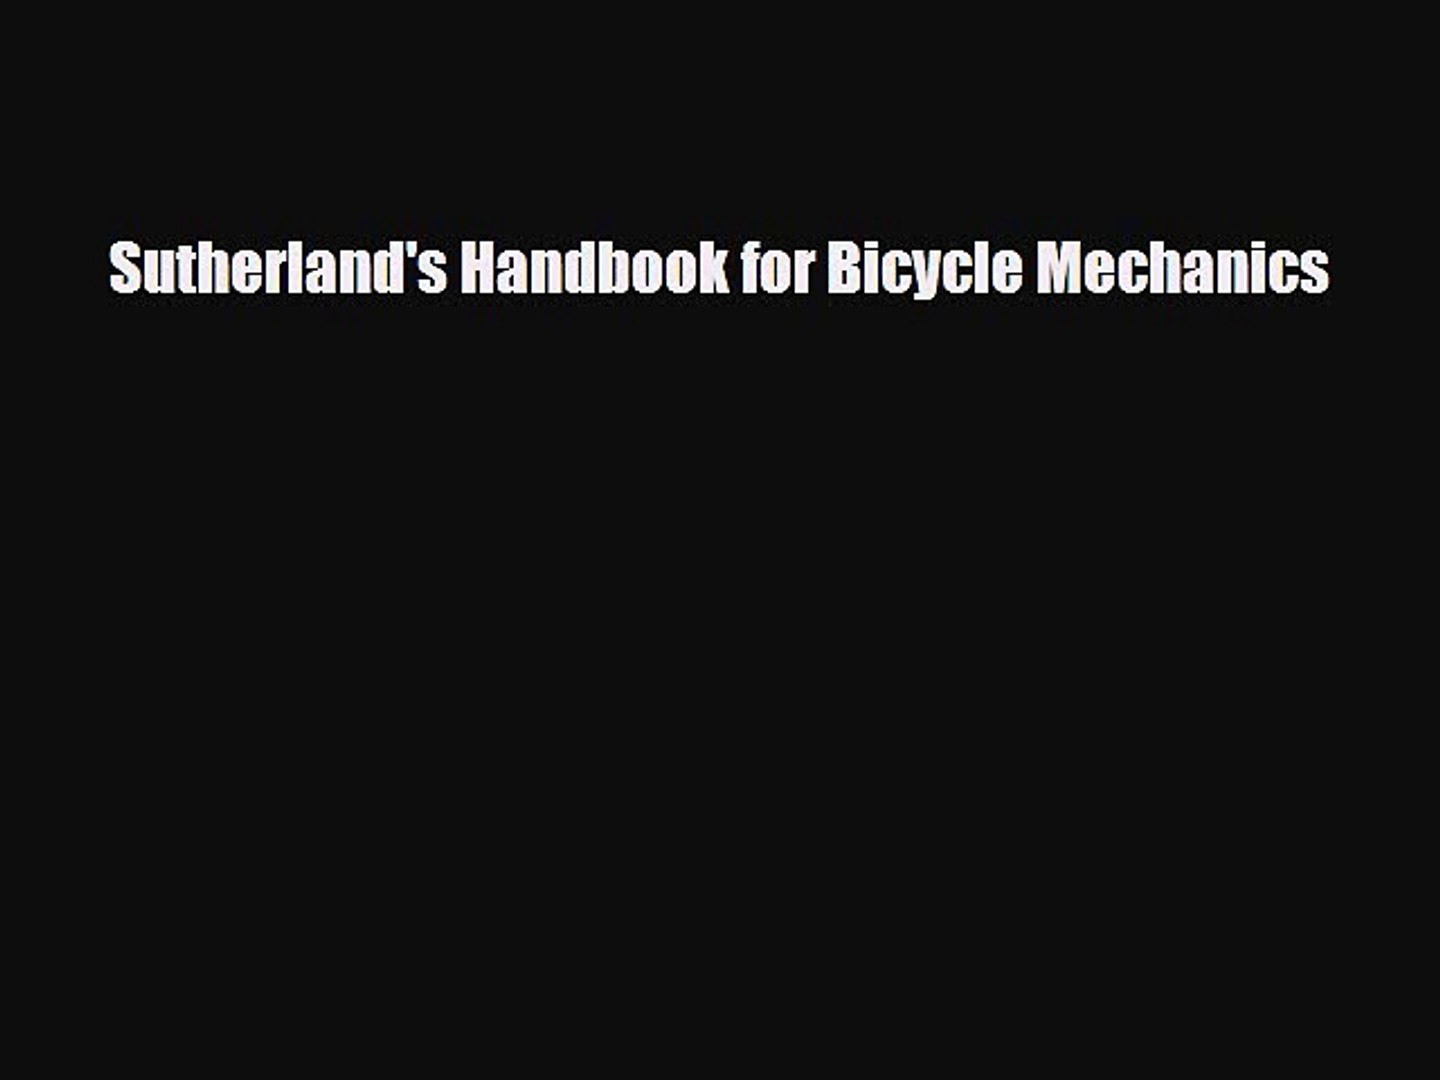 PDF Sutherland's Handbook for Bicycle Mechanics Ebook - video Dailymotion